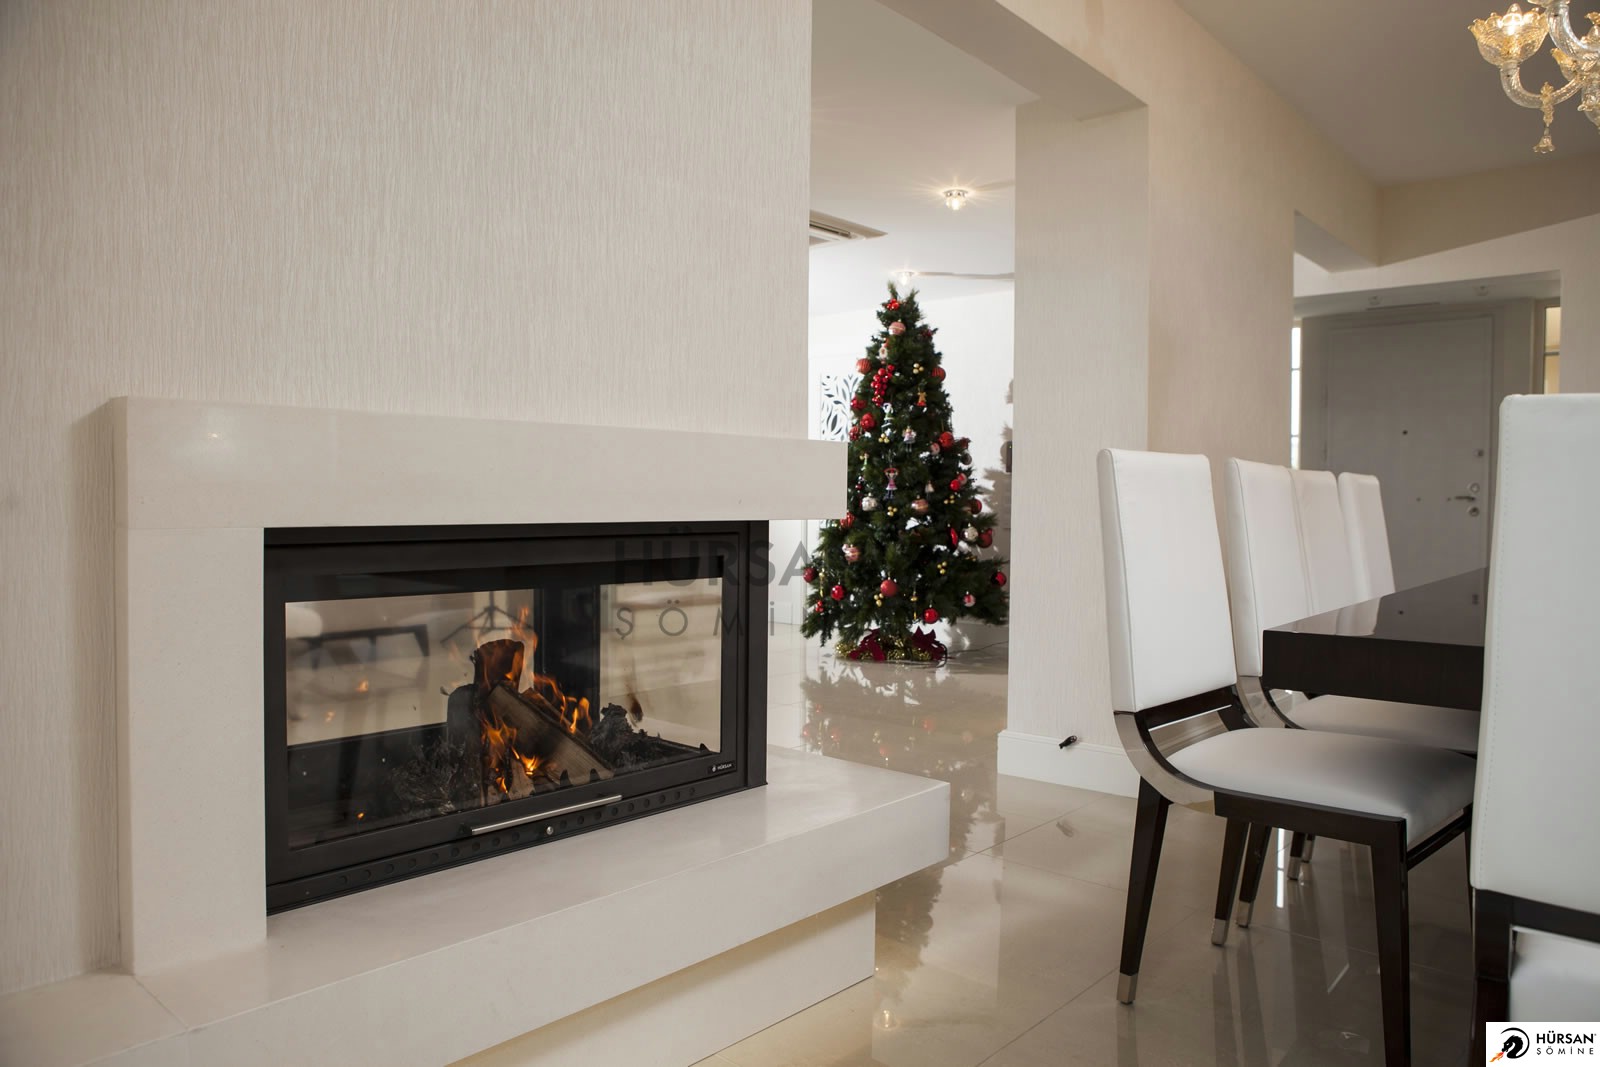 Hursan Fireplace - Double-Sided Fireplace Surrounds